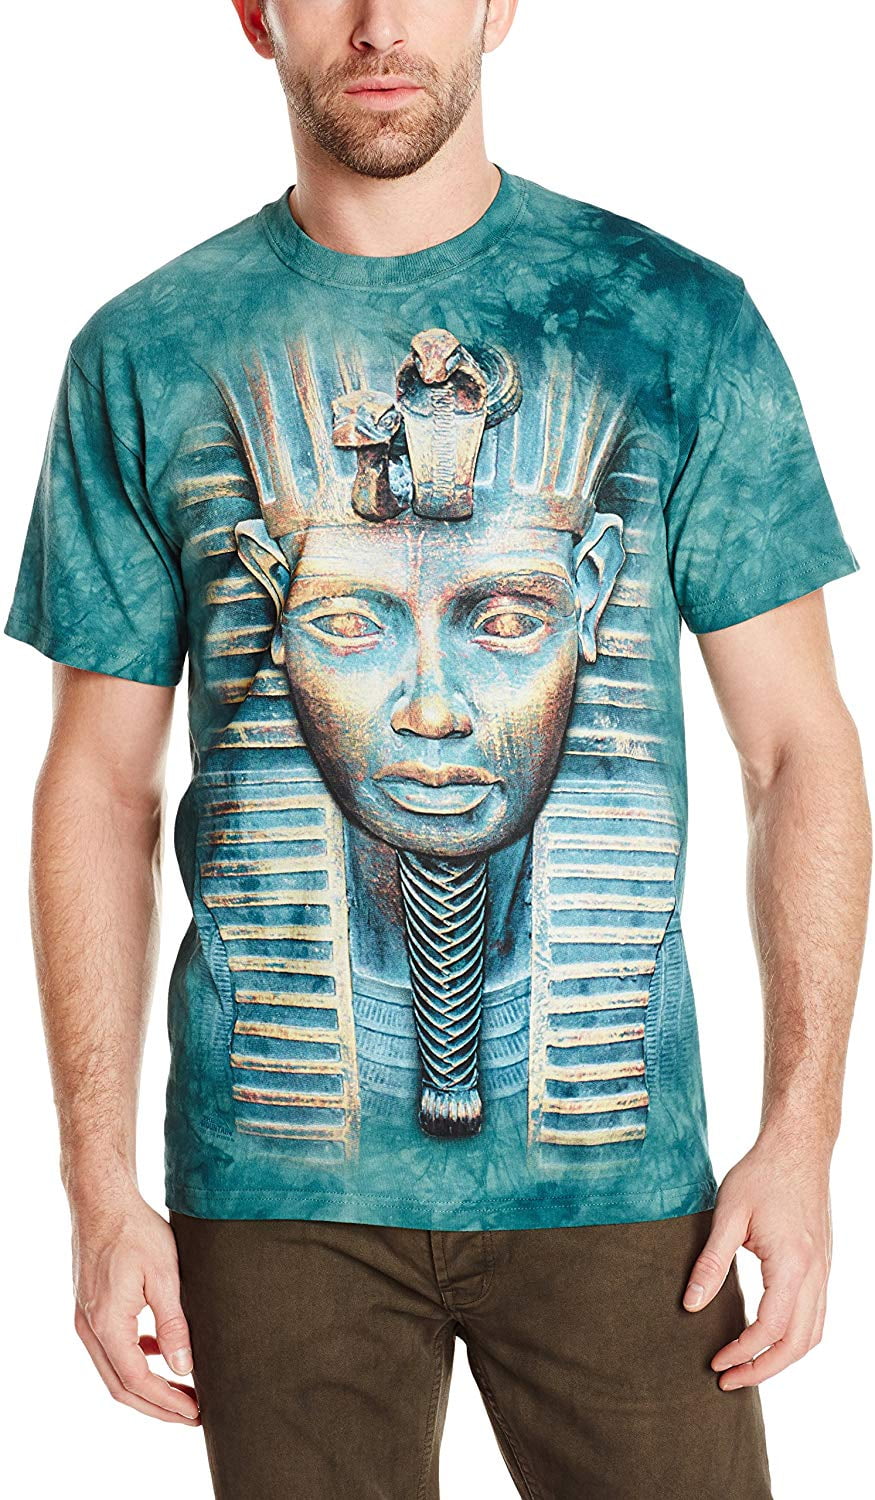 Turquoise 100% Cotton Big Face Tut Graphic T-Shirt NEW - Walmart.com